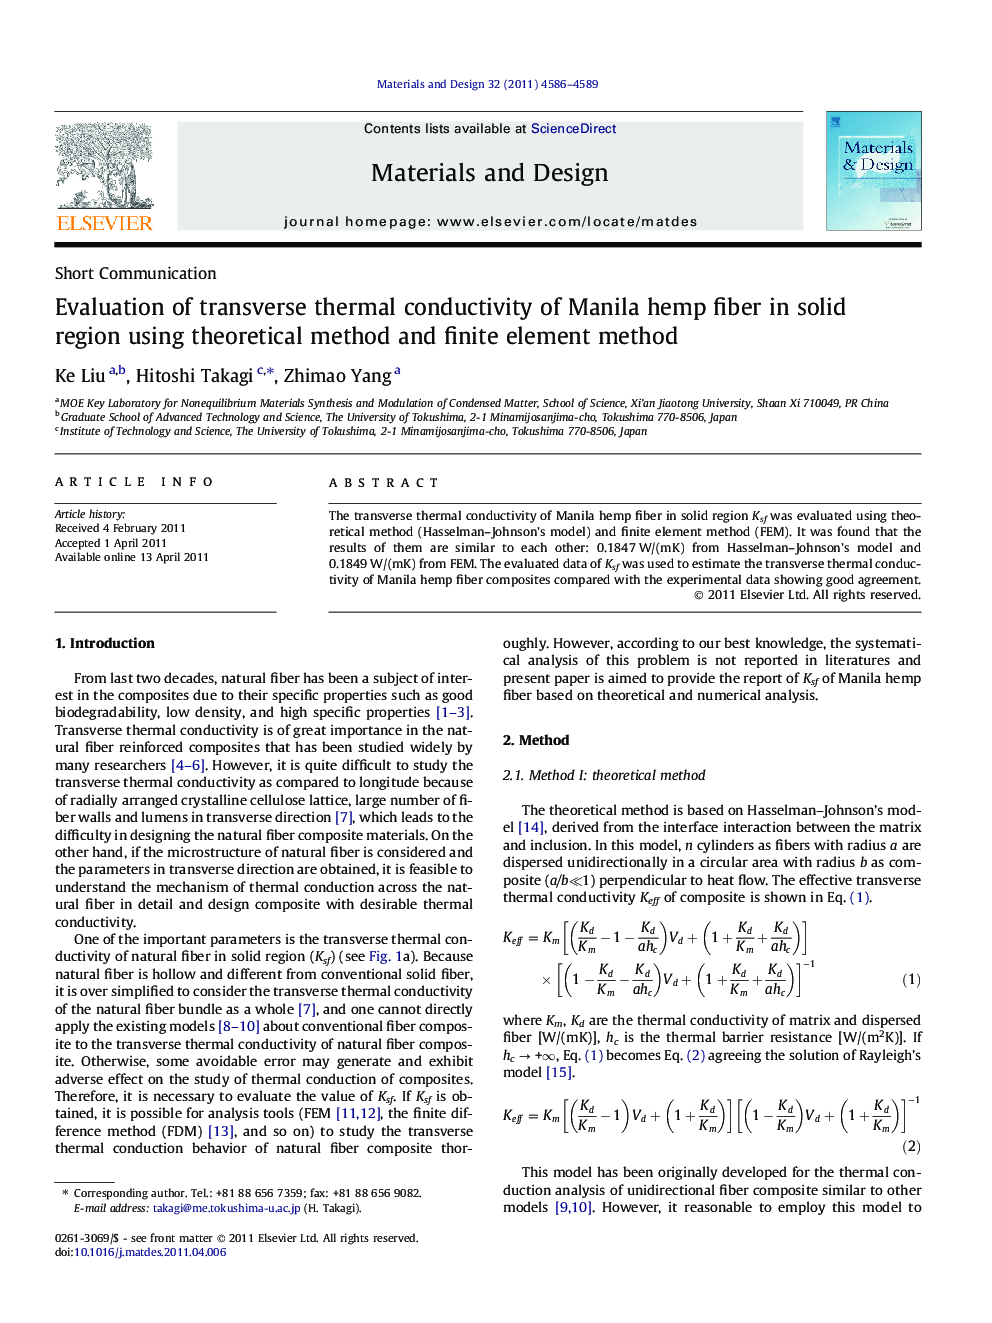 Evaluation of transverse thermal conductivity of Manila hemp fiber in solid region using theoretical method and finite element method